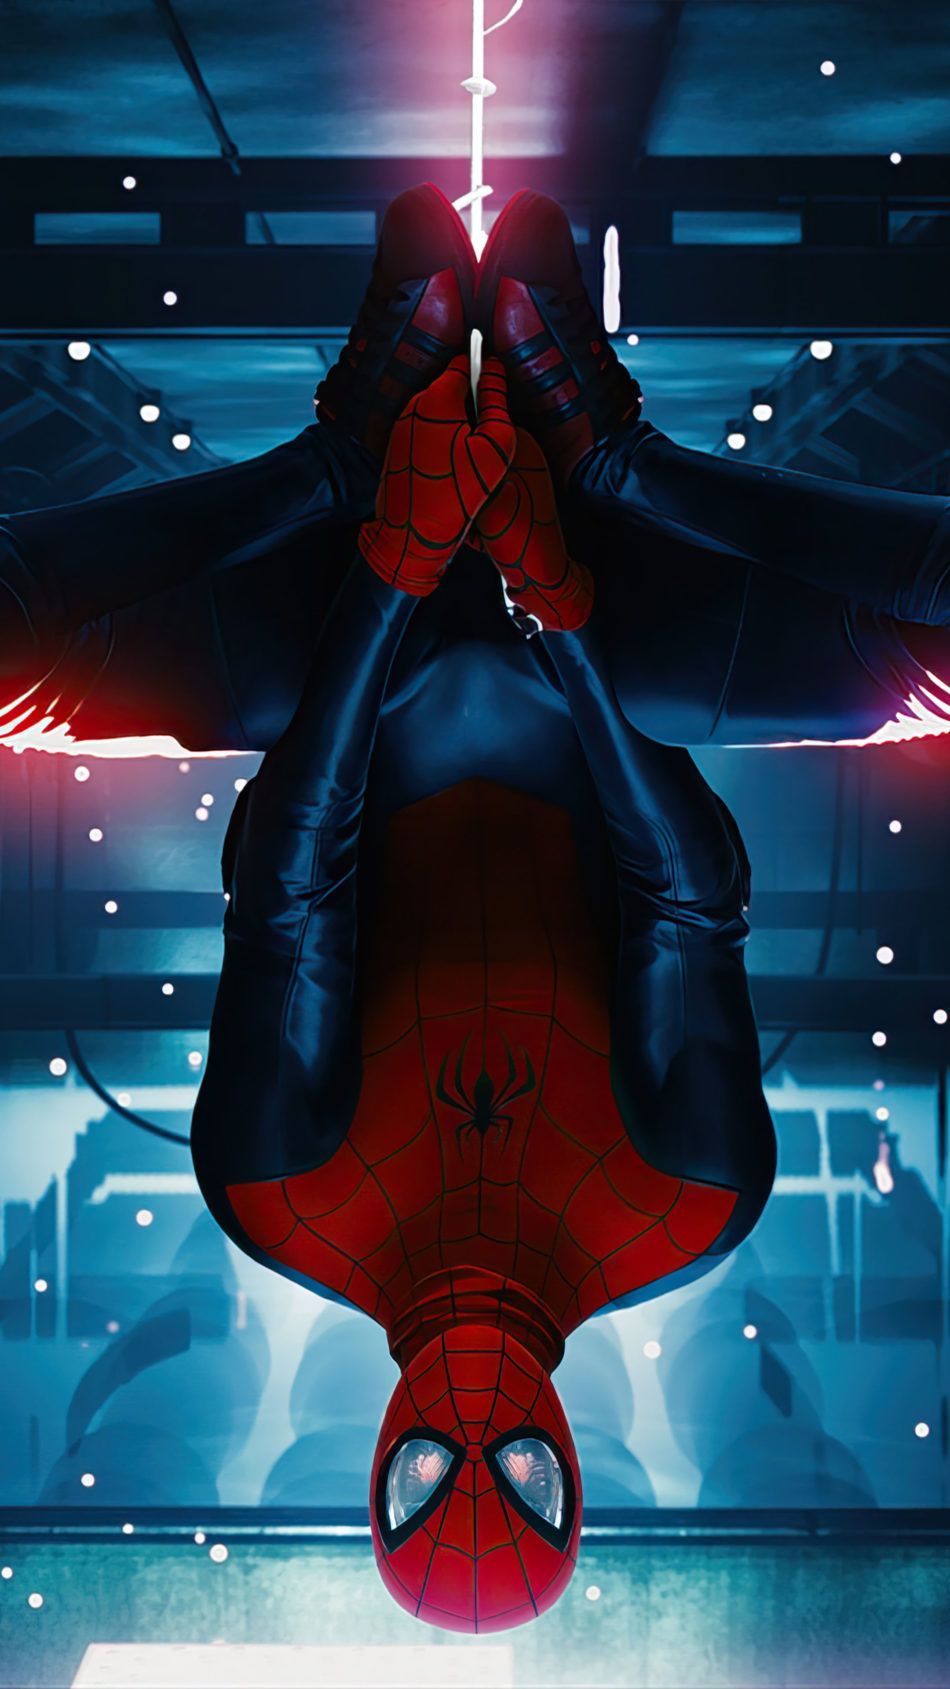 Spider Man Miles Morales Hanging Upside Down 4K Ultra HD Mobile Wallpaper. Spiderman, Spiderman Upside Down, Marvel Comics Wallpaper